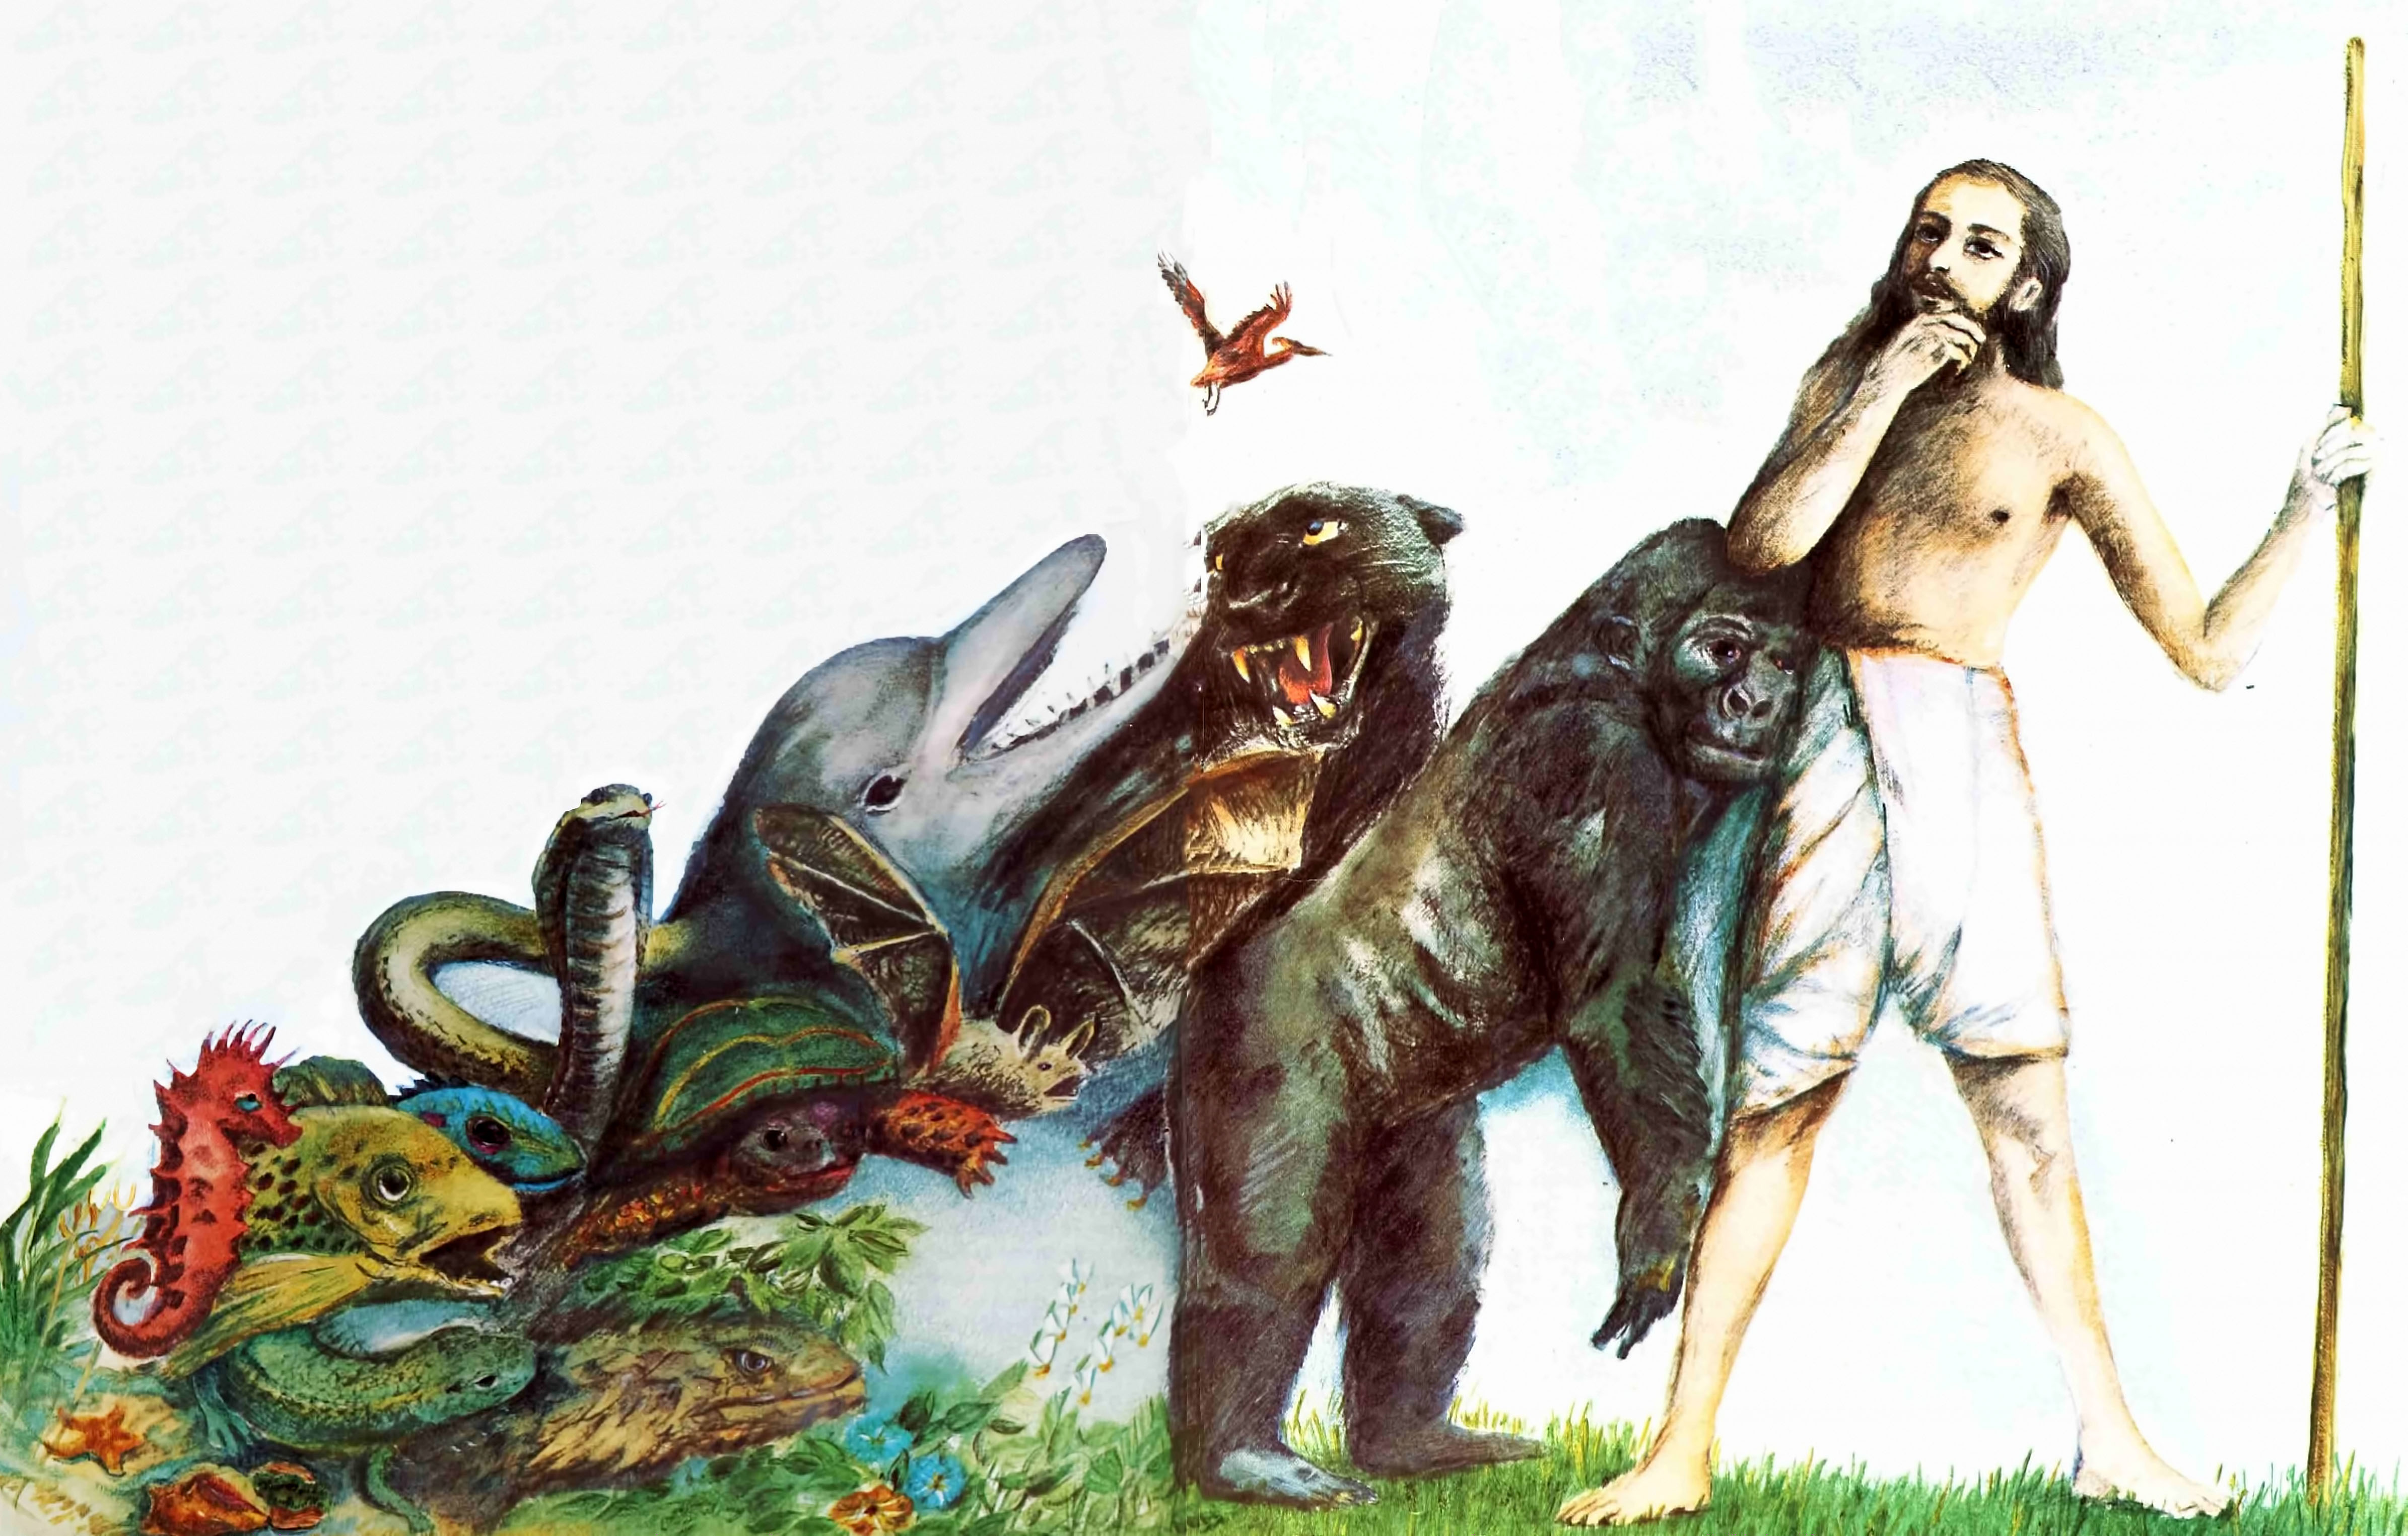 Charles Darwins Theory of Evolution